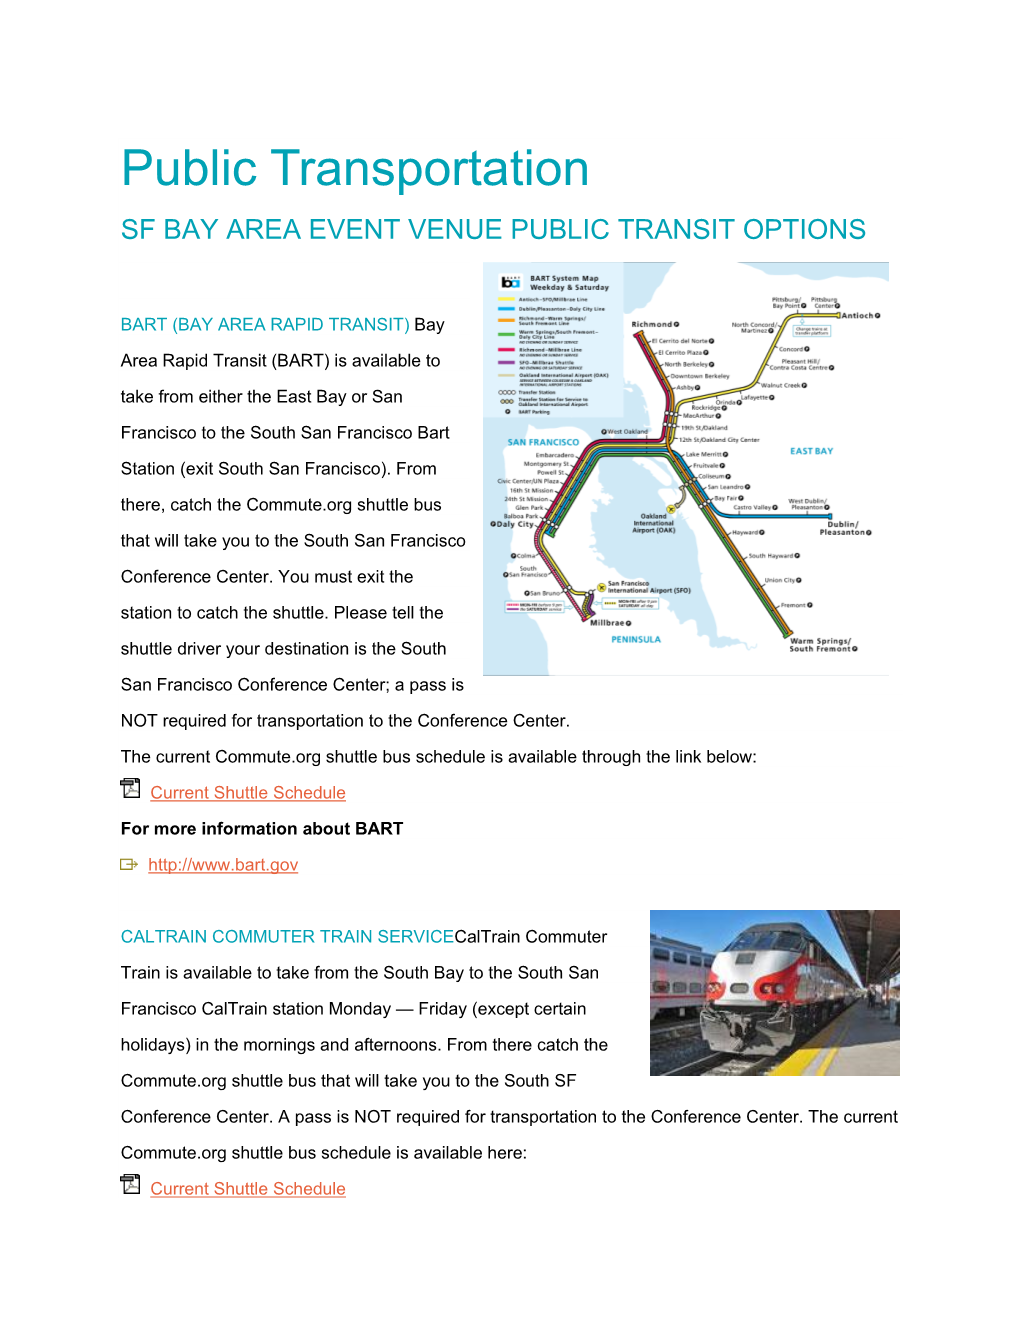 Public Transportation Options Information